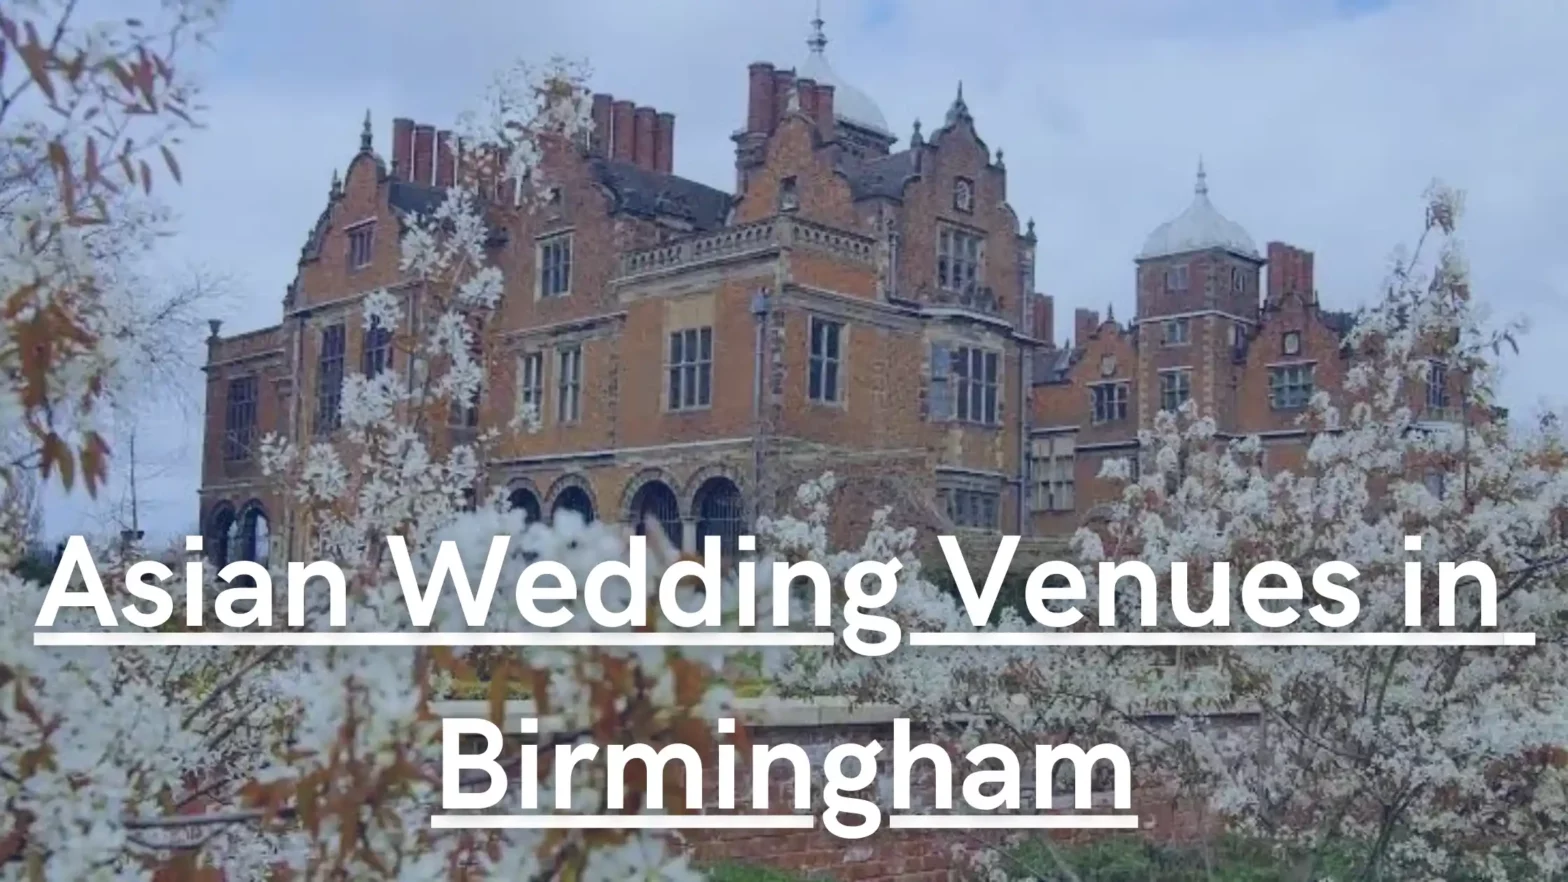 Asian Wedding Venues in Birmingham.